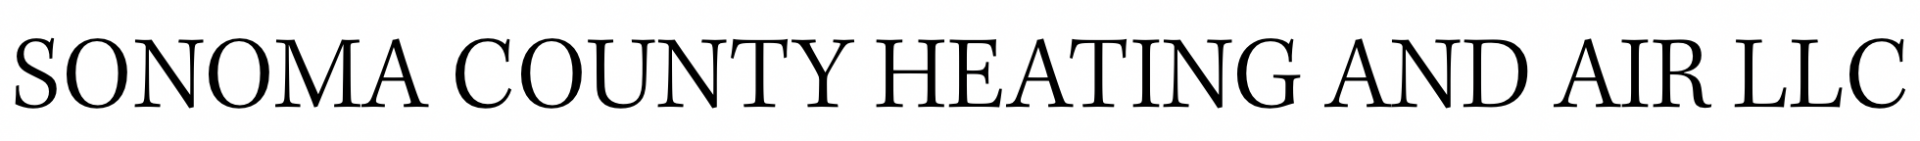 Sonoma County Heating and Air LLC logo